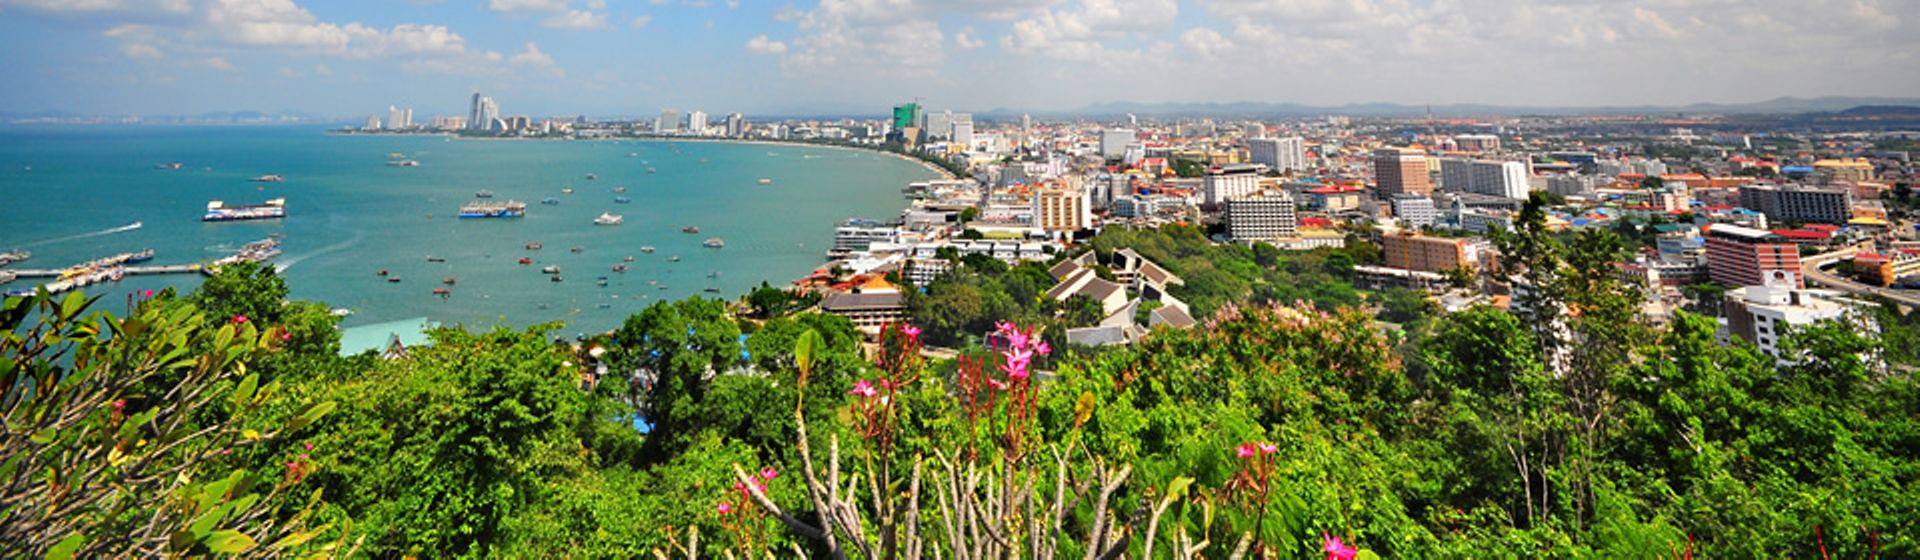 Holidays to Pattaya Image